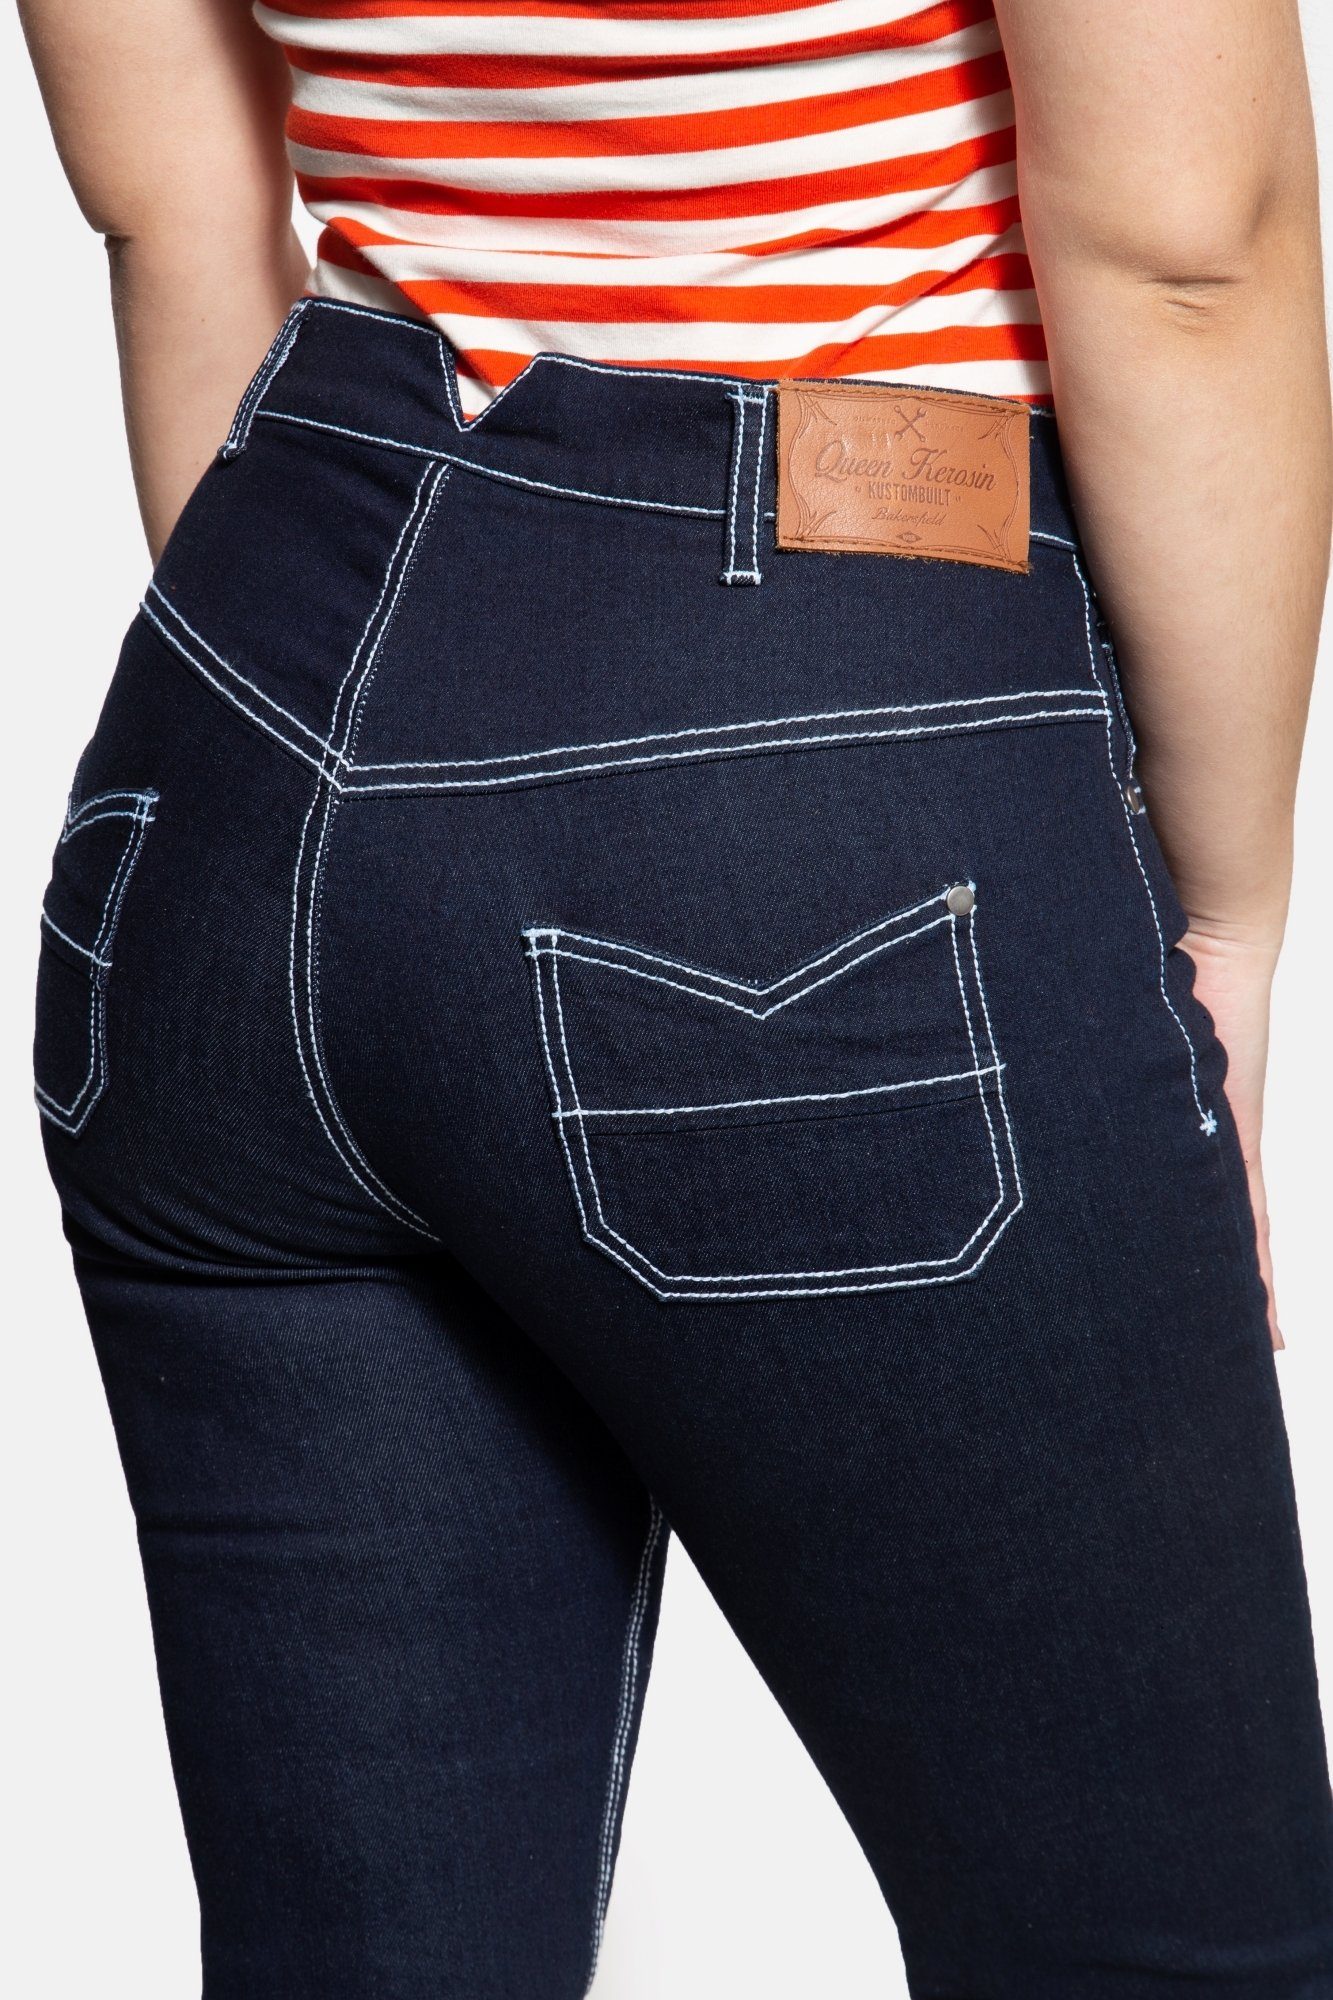 Betty QueenKerosin 5-Pocket-Design im Slim-fit-Jeans